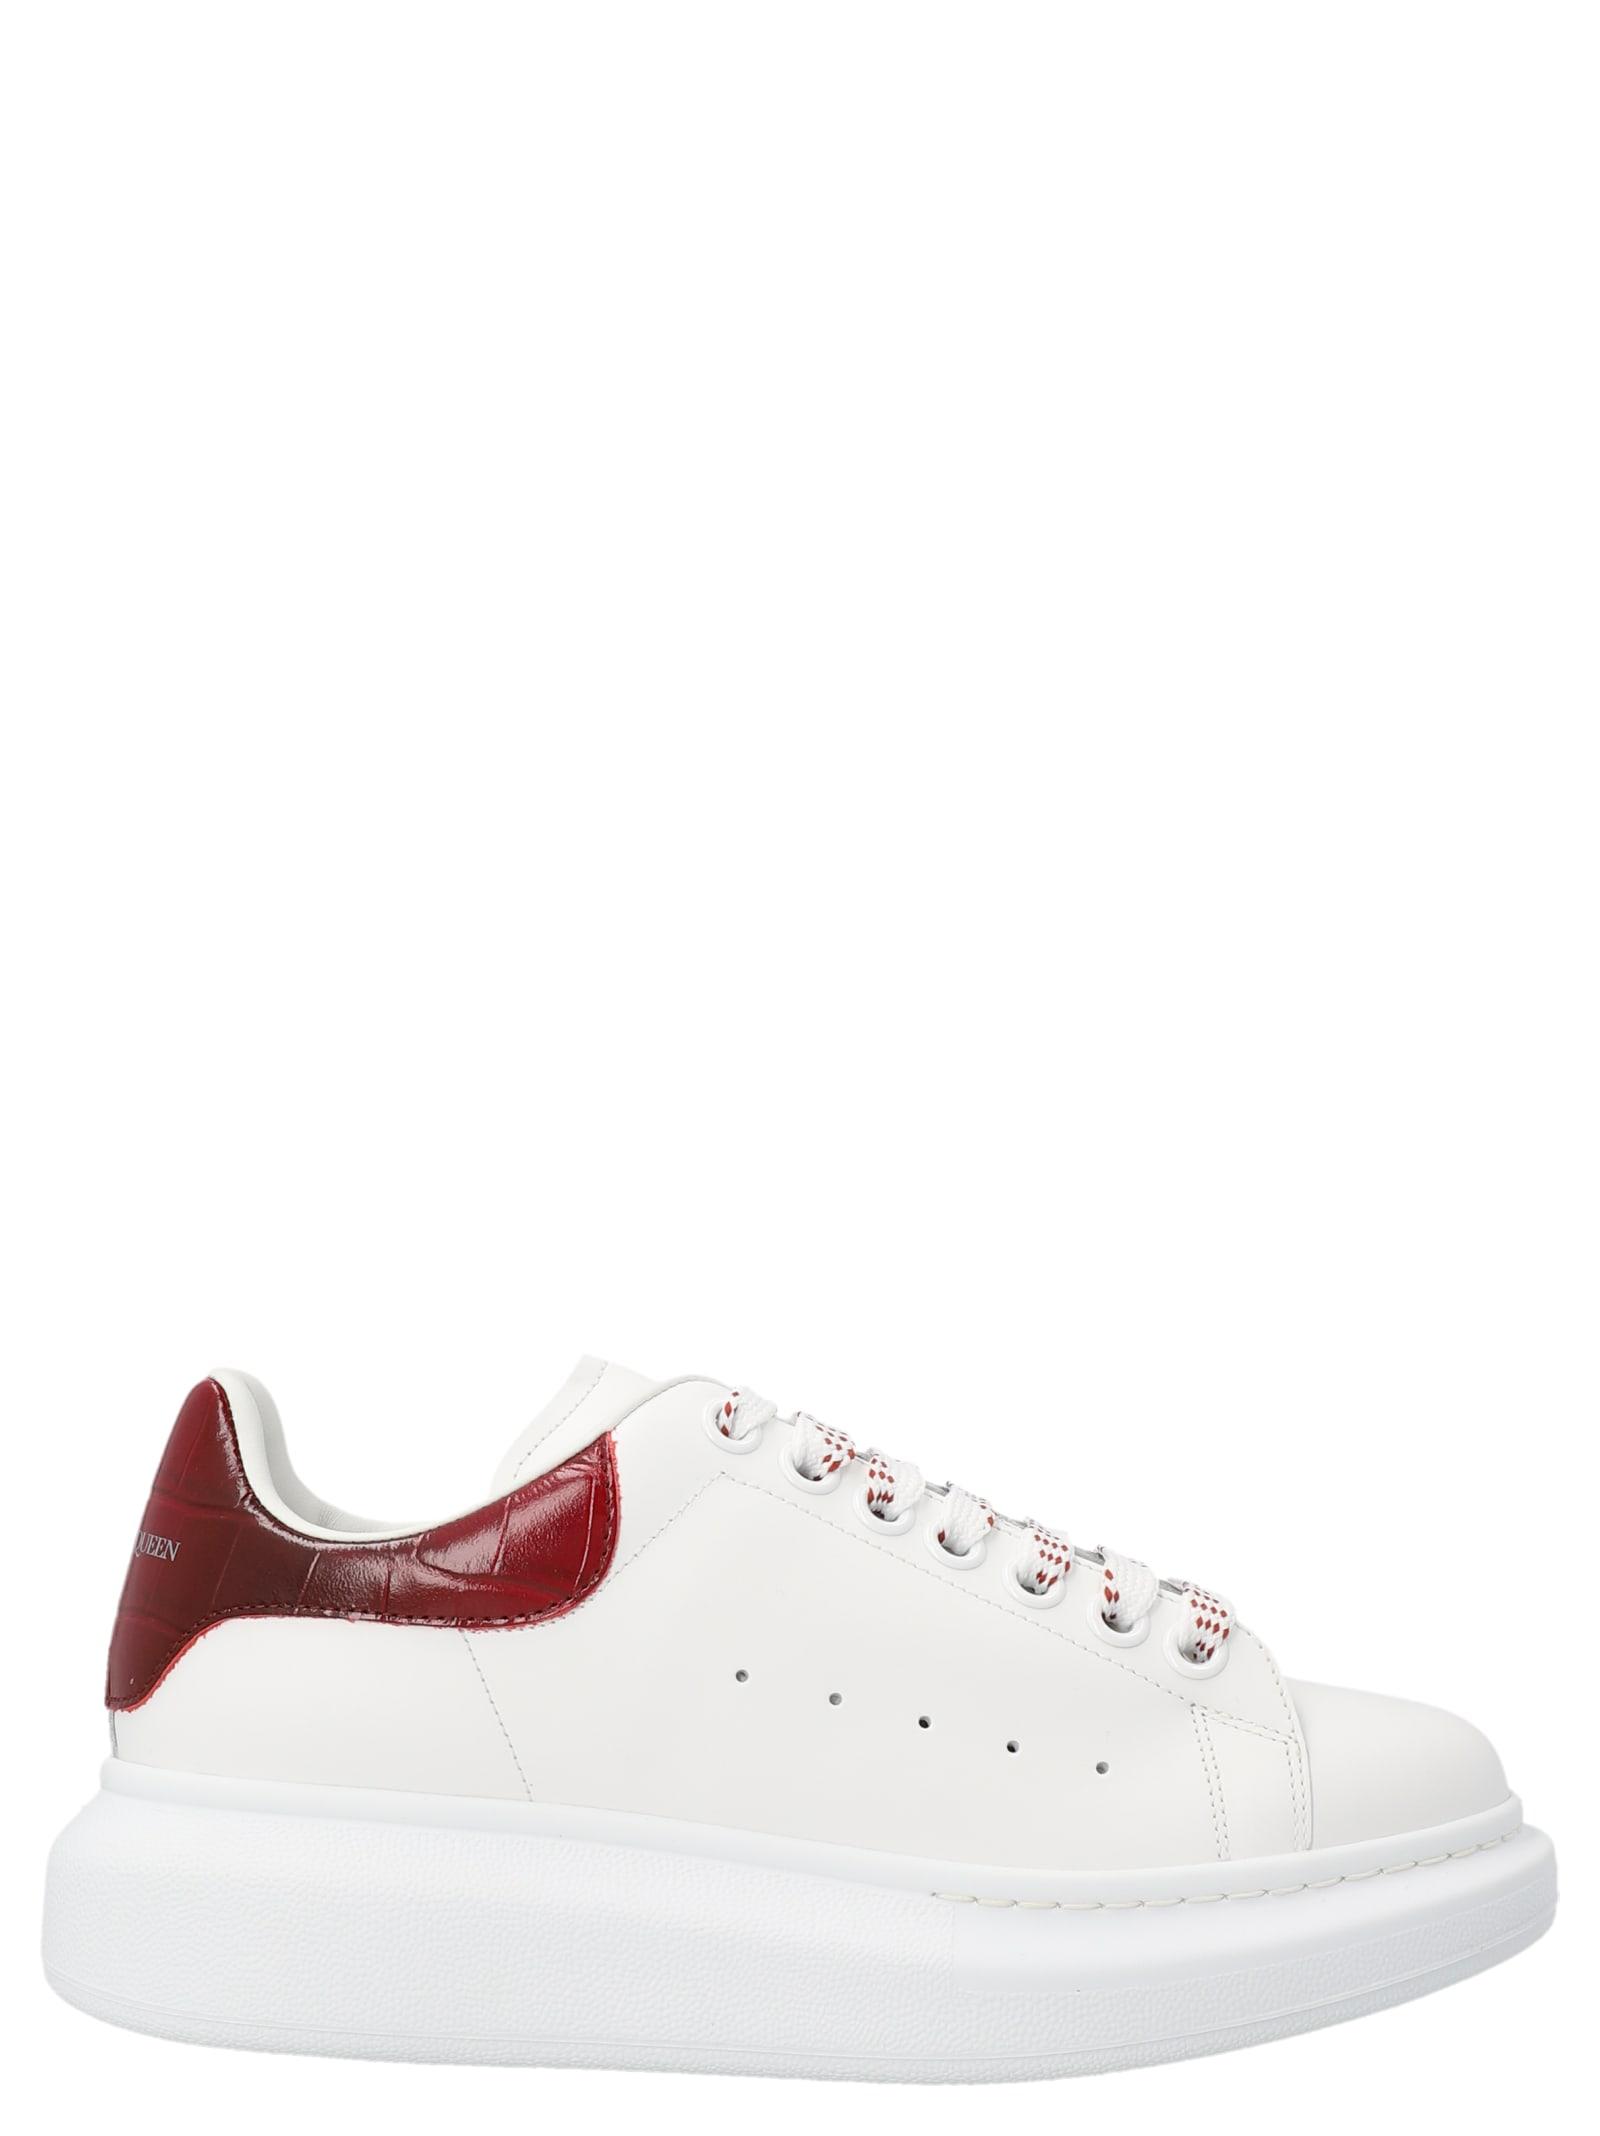 Alexander McQueen Oversize Sole Sneakers in White | Lyst